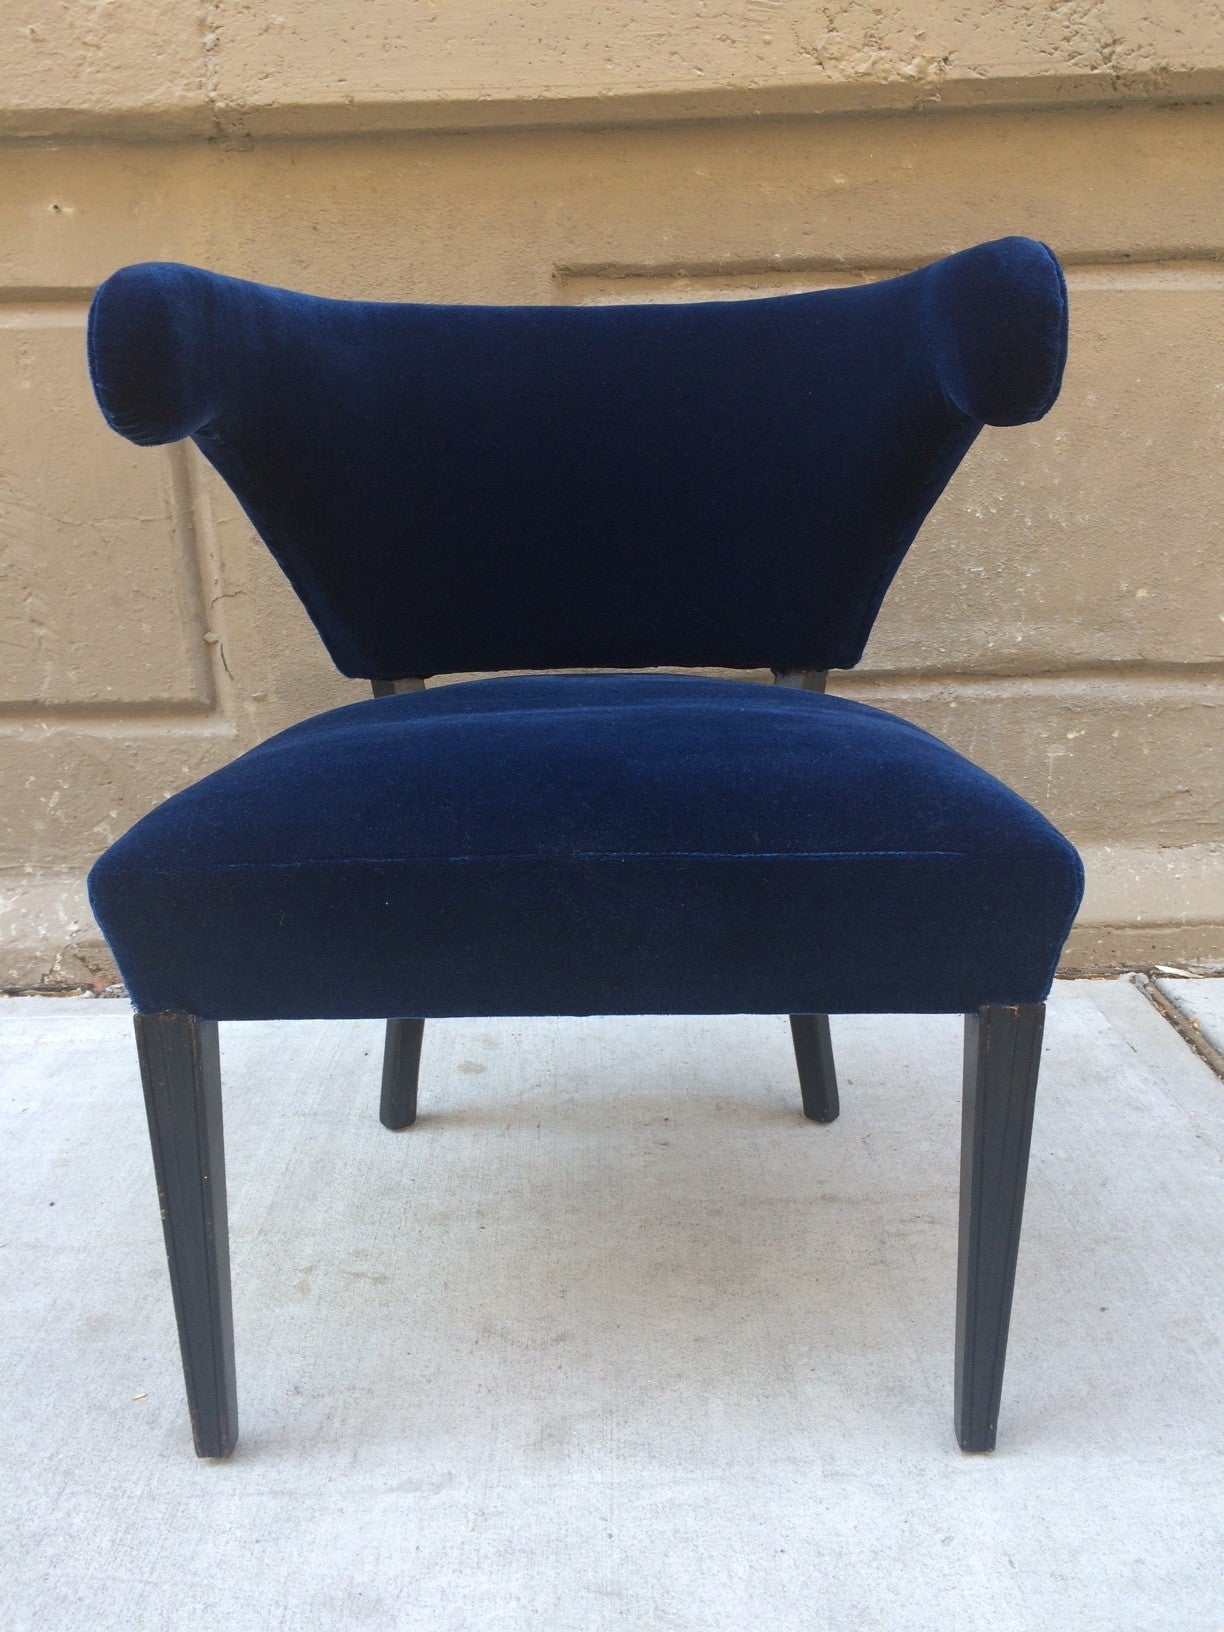 Grosfeld House side chair. Upholstered in blue velvet with black lacquered legs. Style of Paul Laszlo.